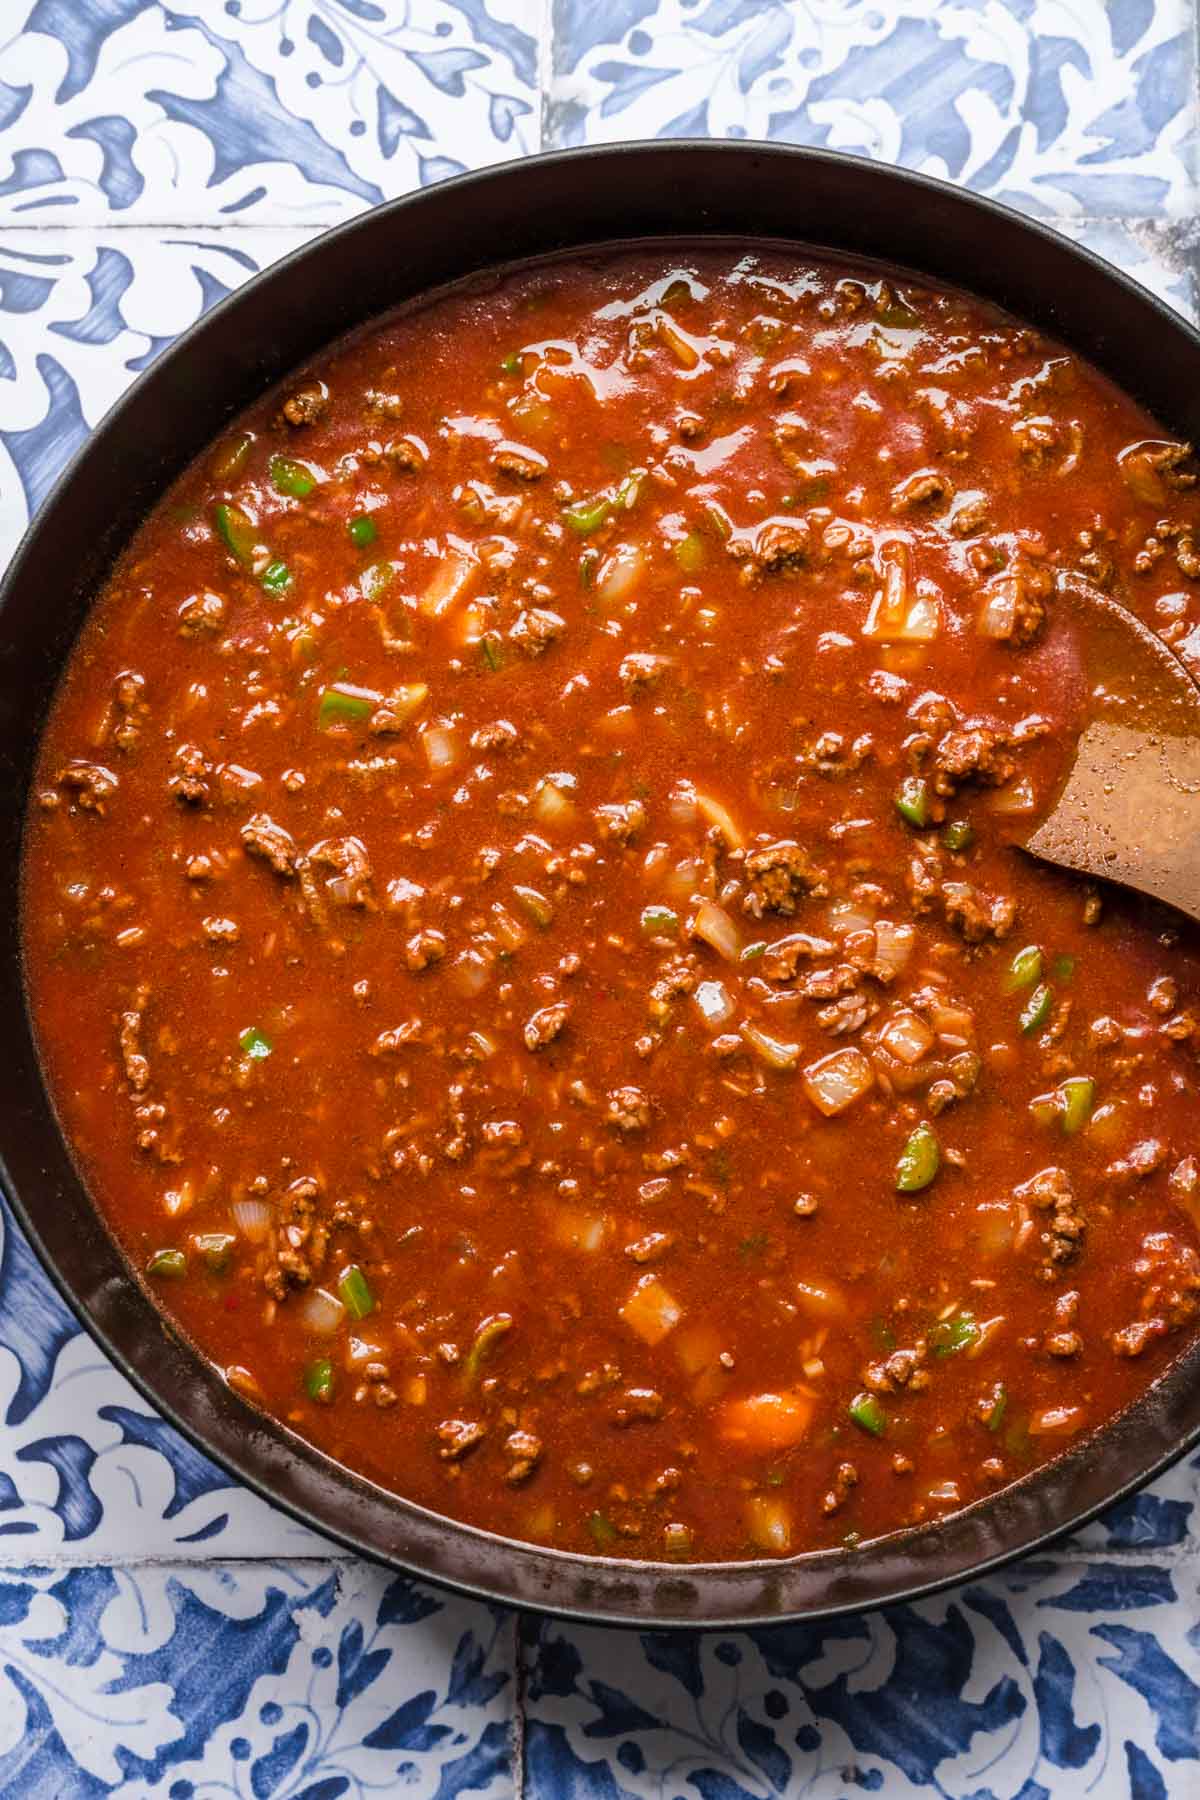 Spanish Beef & Rice Skillet ingredients in cooking pan